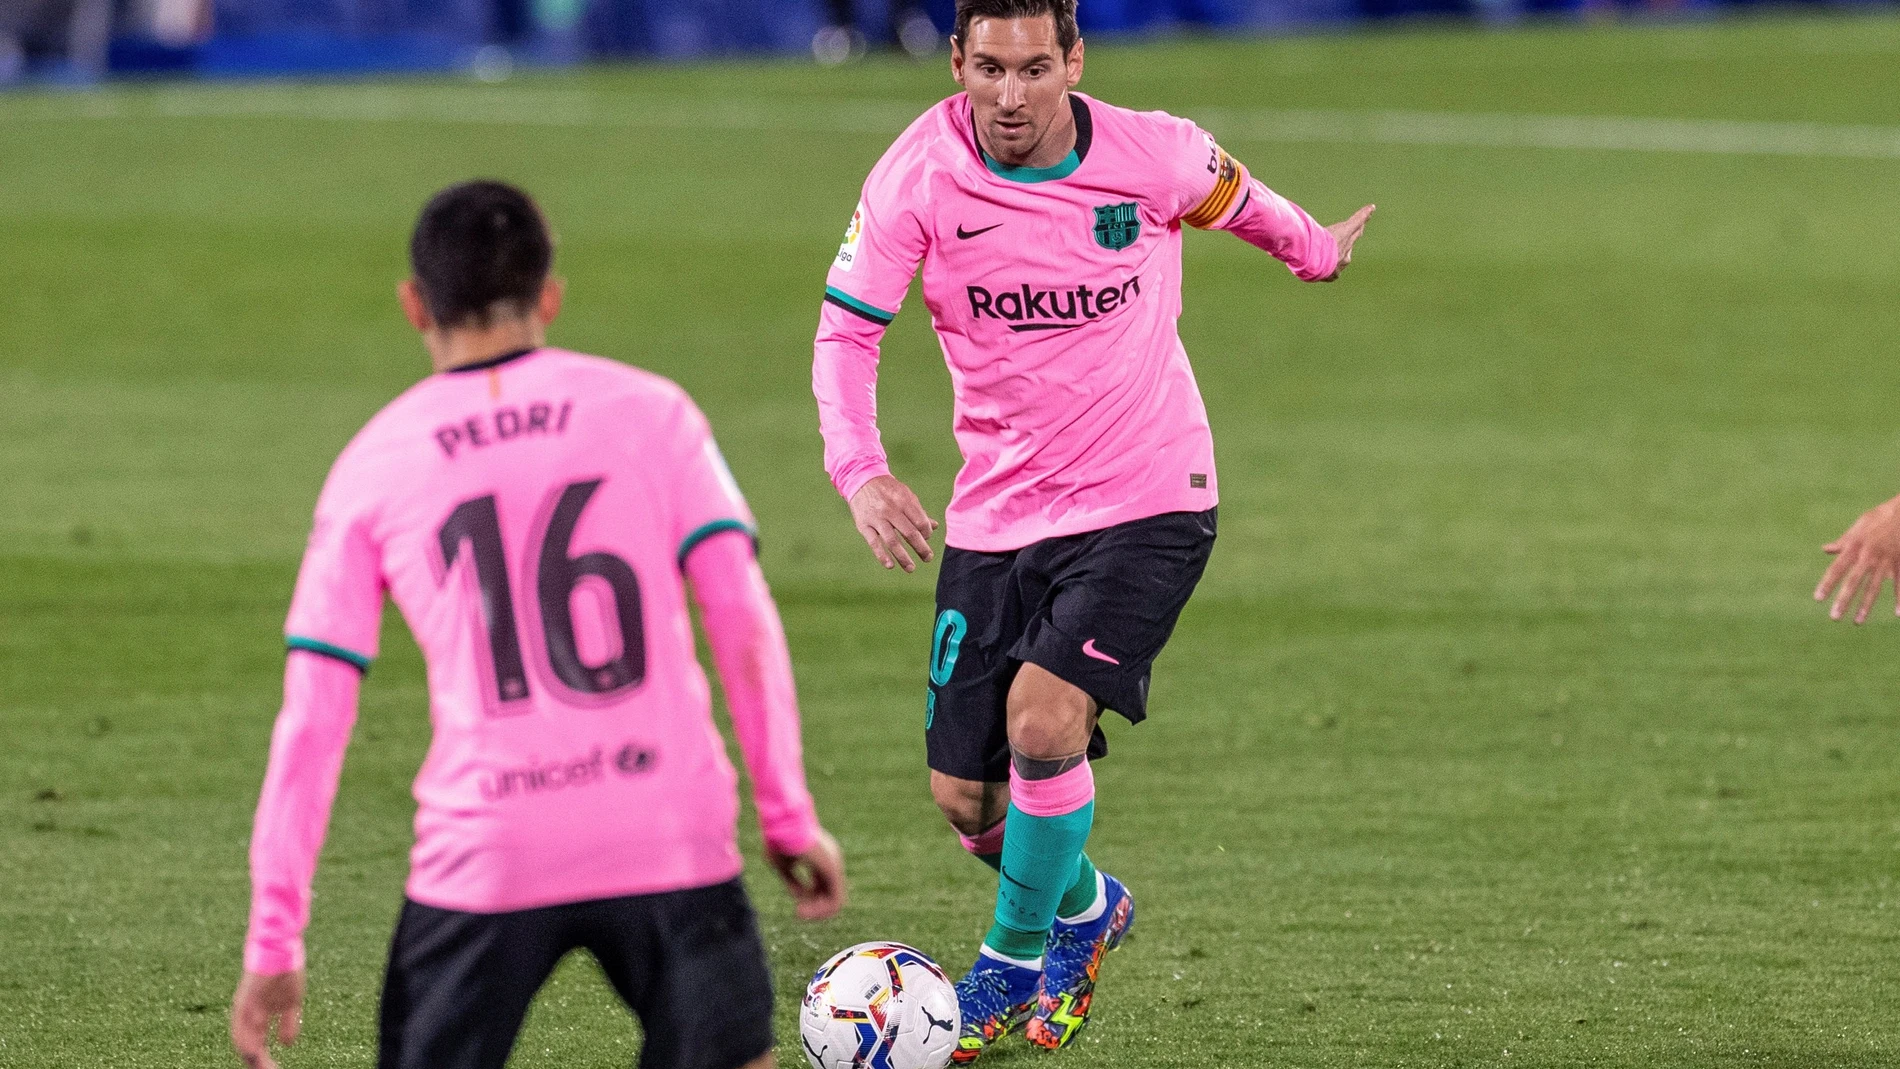 El delantero argentino del Barcelona Leo Messi